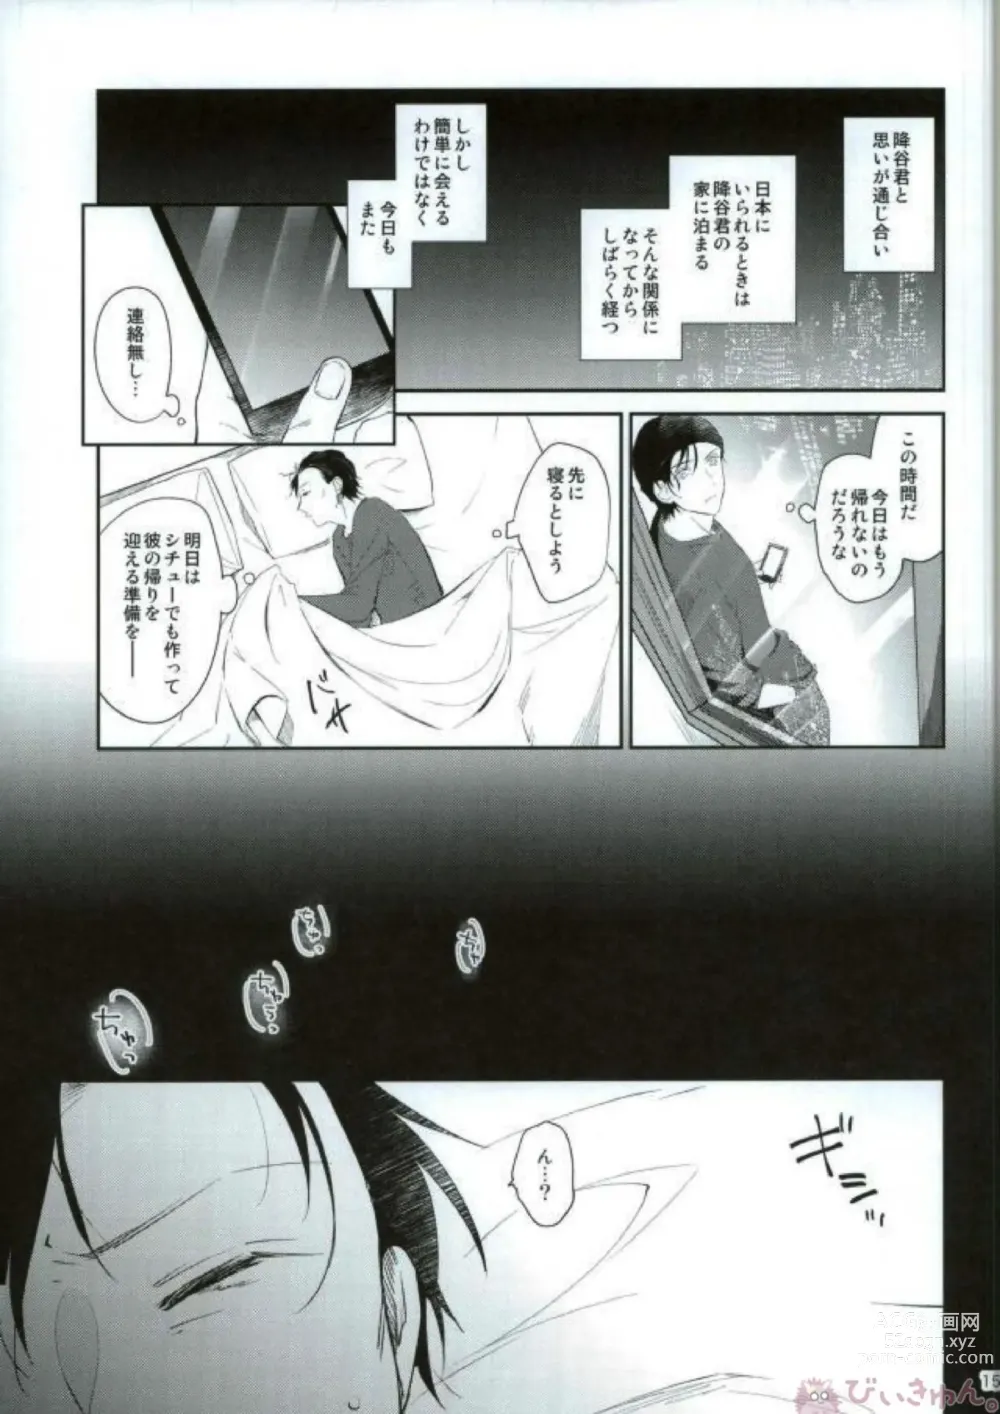 Page 13 of doujinshi SMK